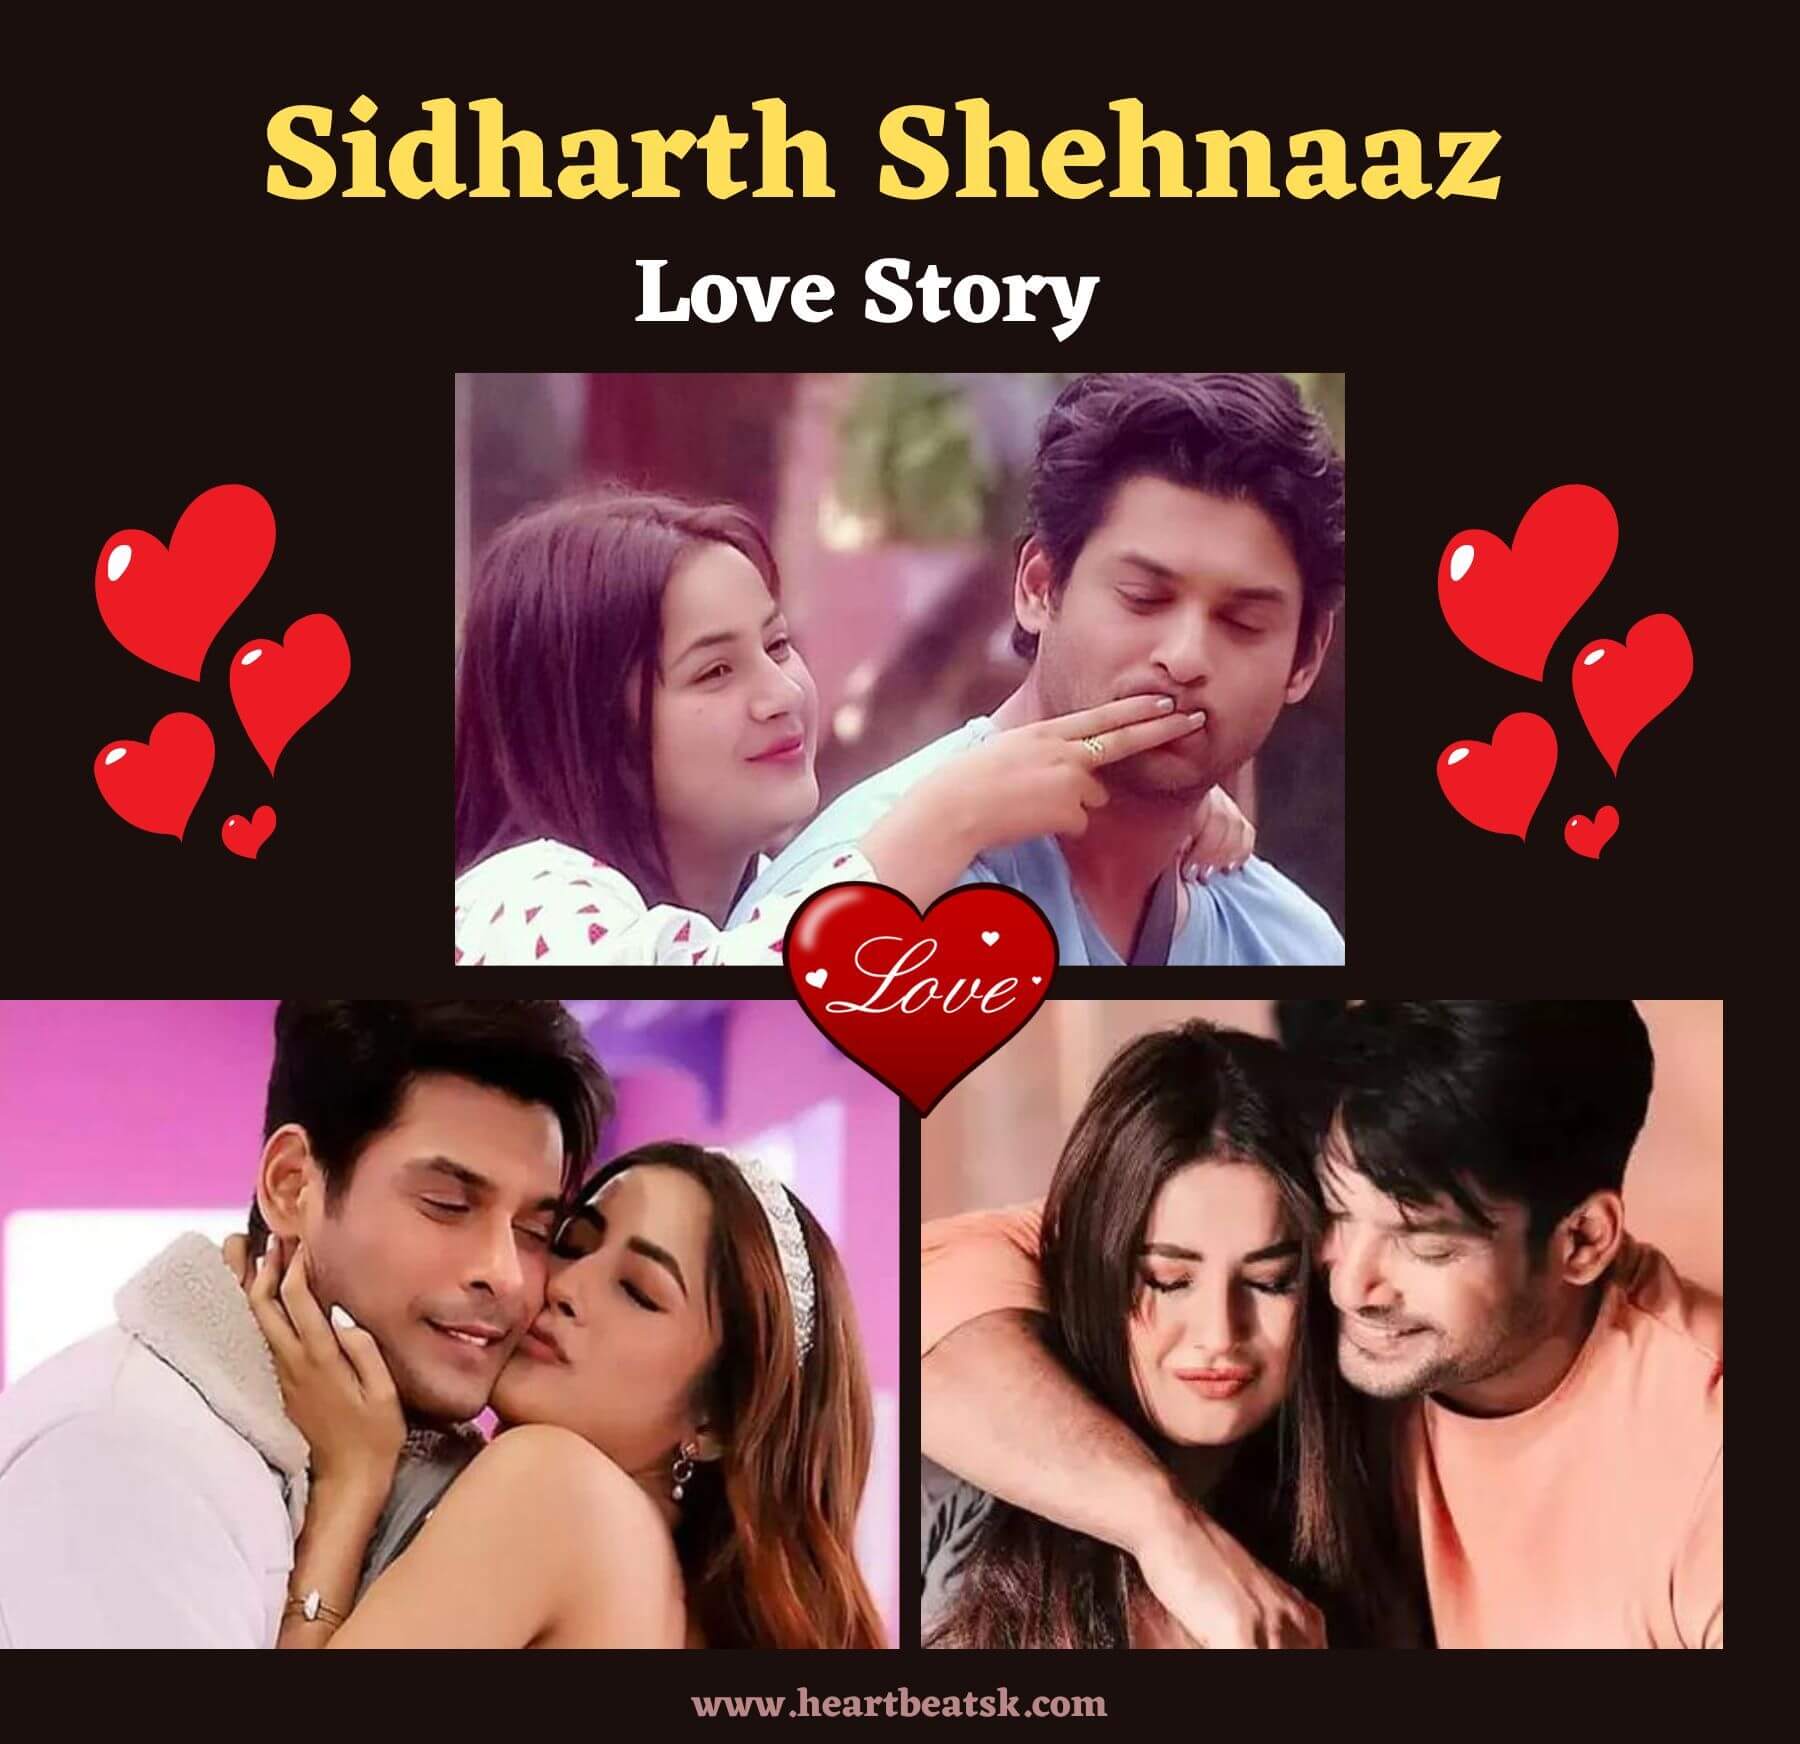 Sidharth Shukla Shehnaaz Gill Love Story